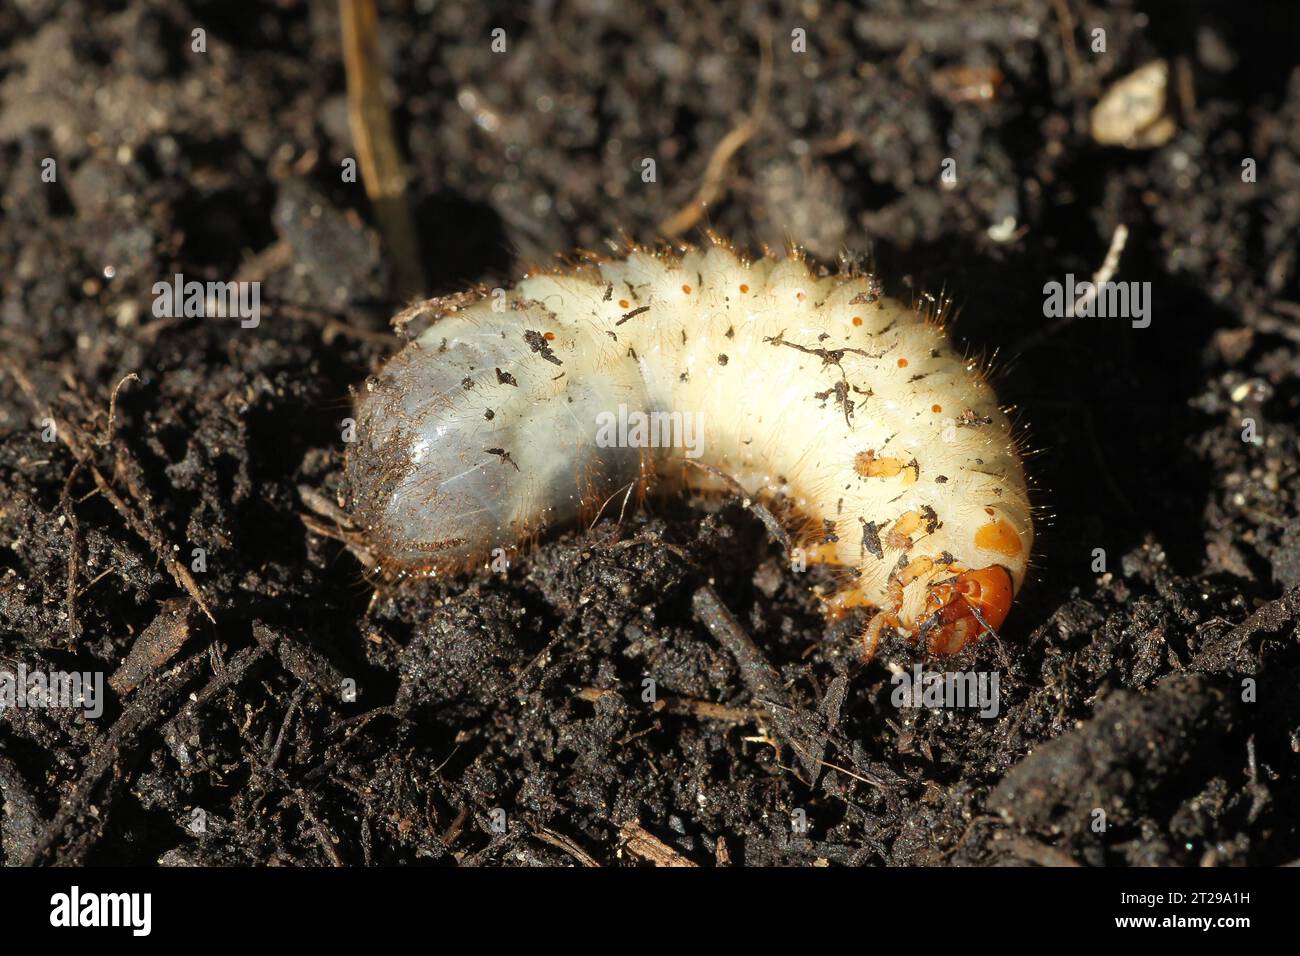 European june beetle (Amphimallon solstitiale) larva grub, Allgaeu, Bavaria, Germany Stock Photo